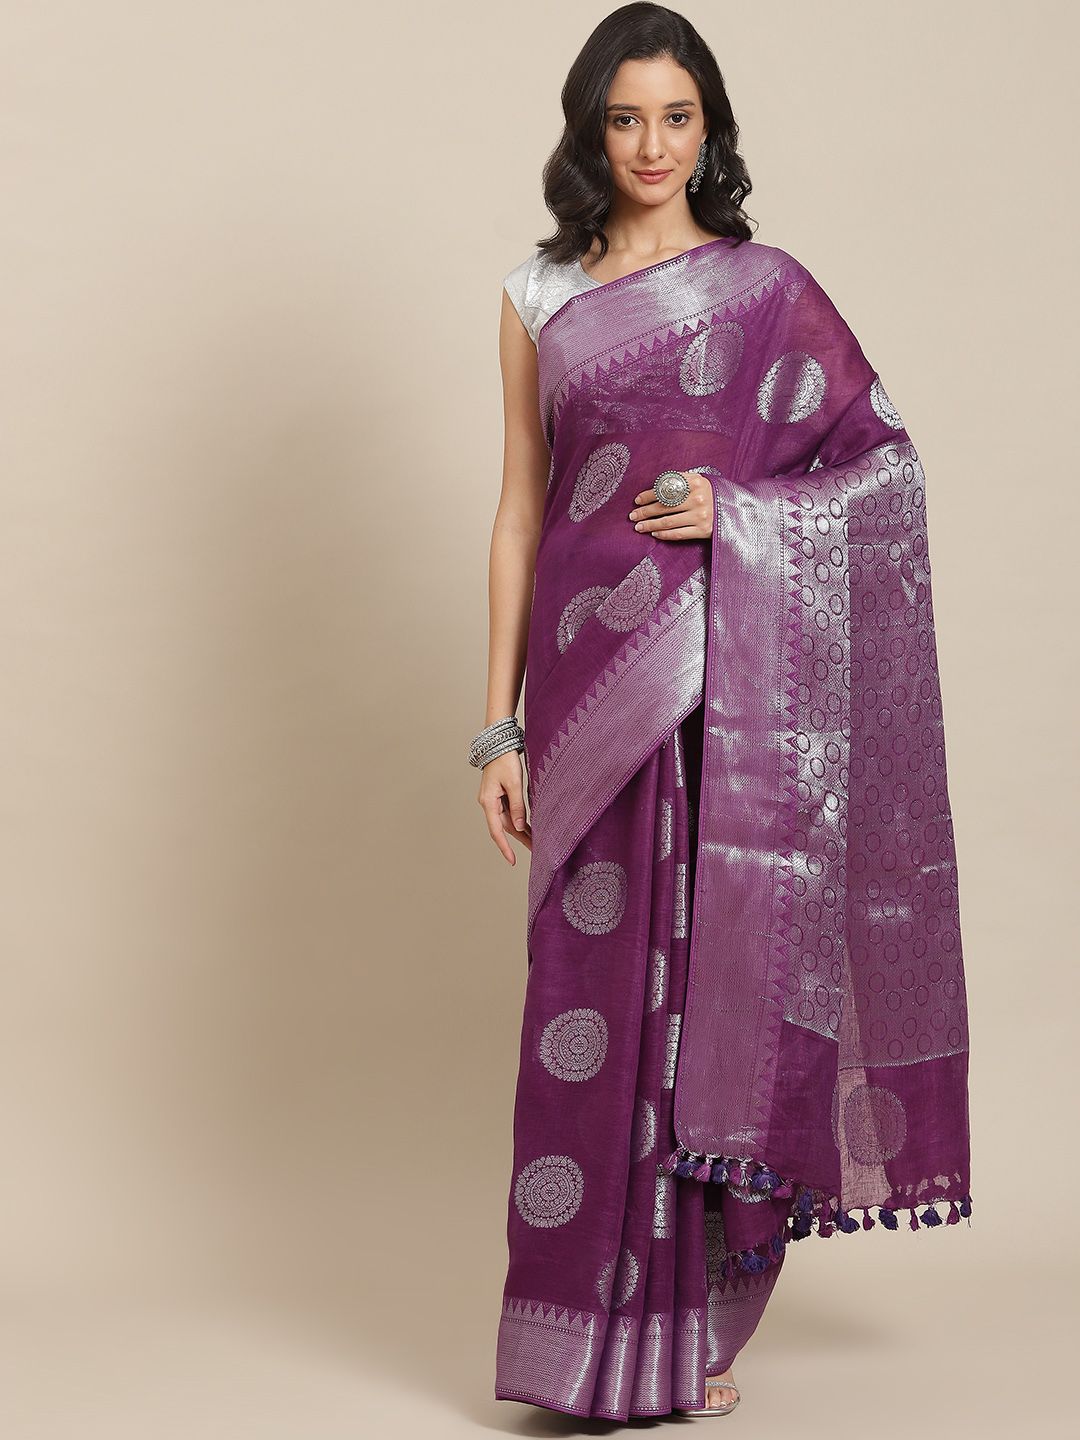 swatika Purple & Silver-Toned Ethnic Motifs Zari Pure Linen Bhagalpuri Saree Price in India